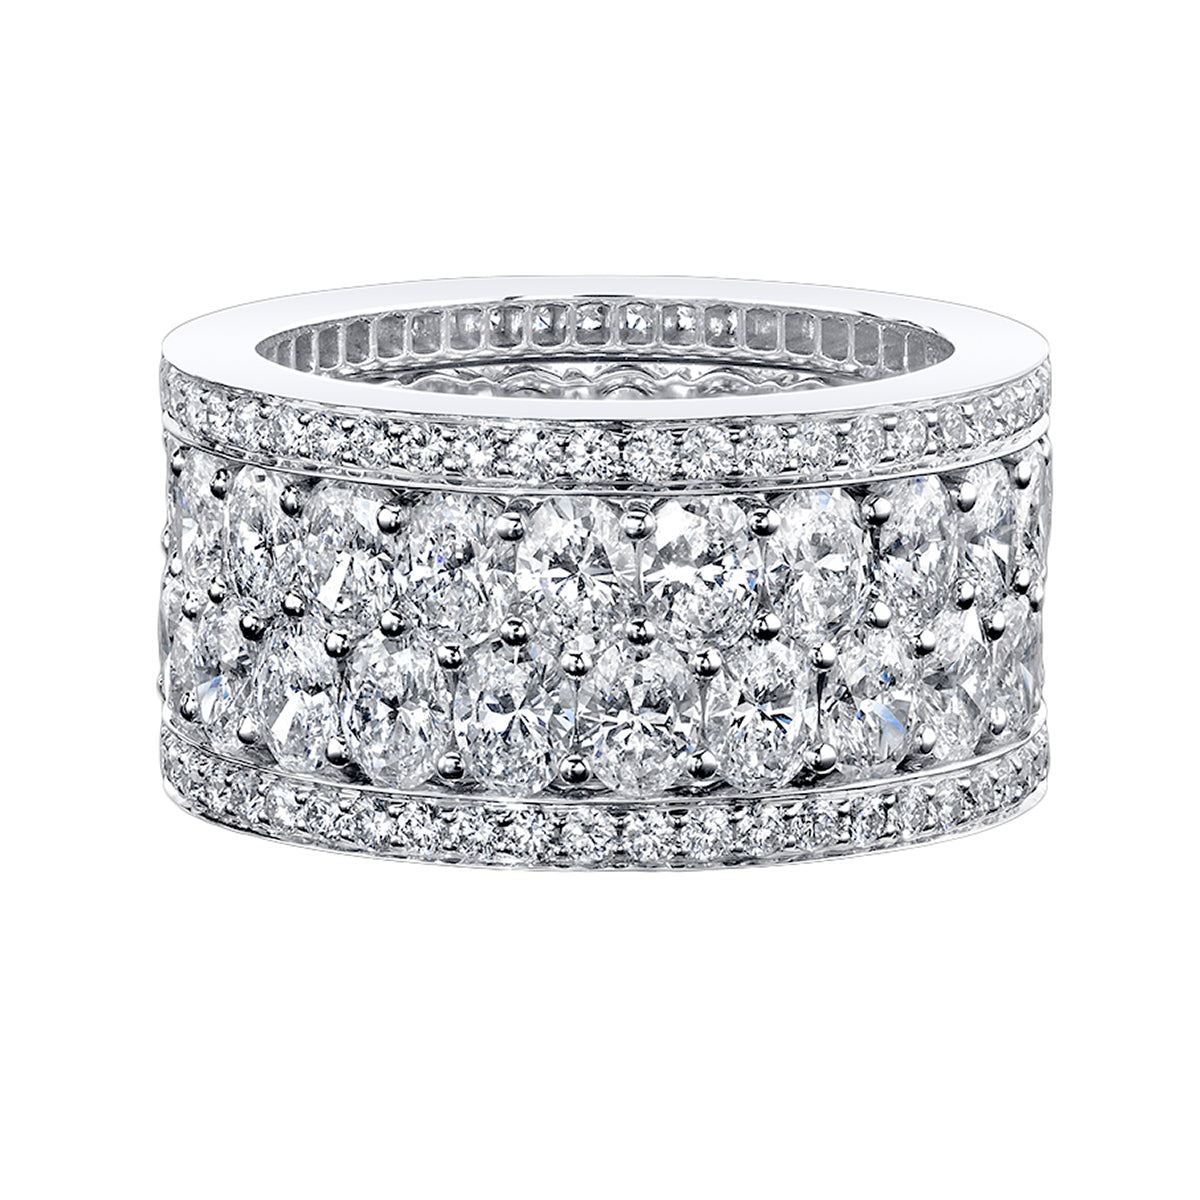 Pink Sapphire, Ruby & Diamond Masterpiece Necklace - Platinum | Robert Procop